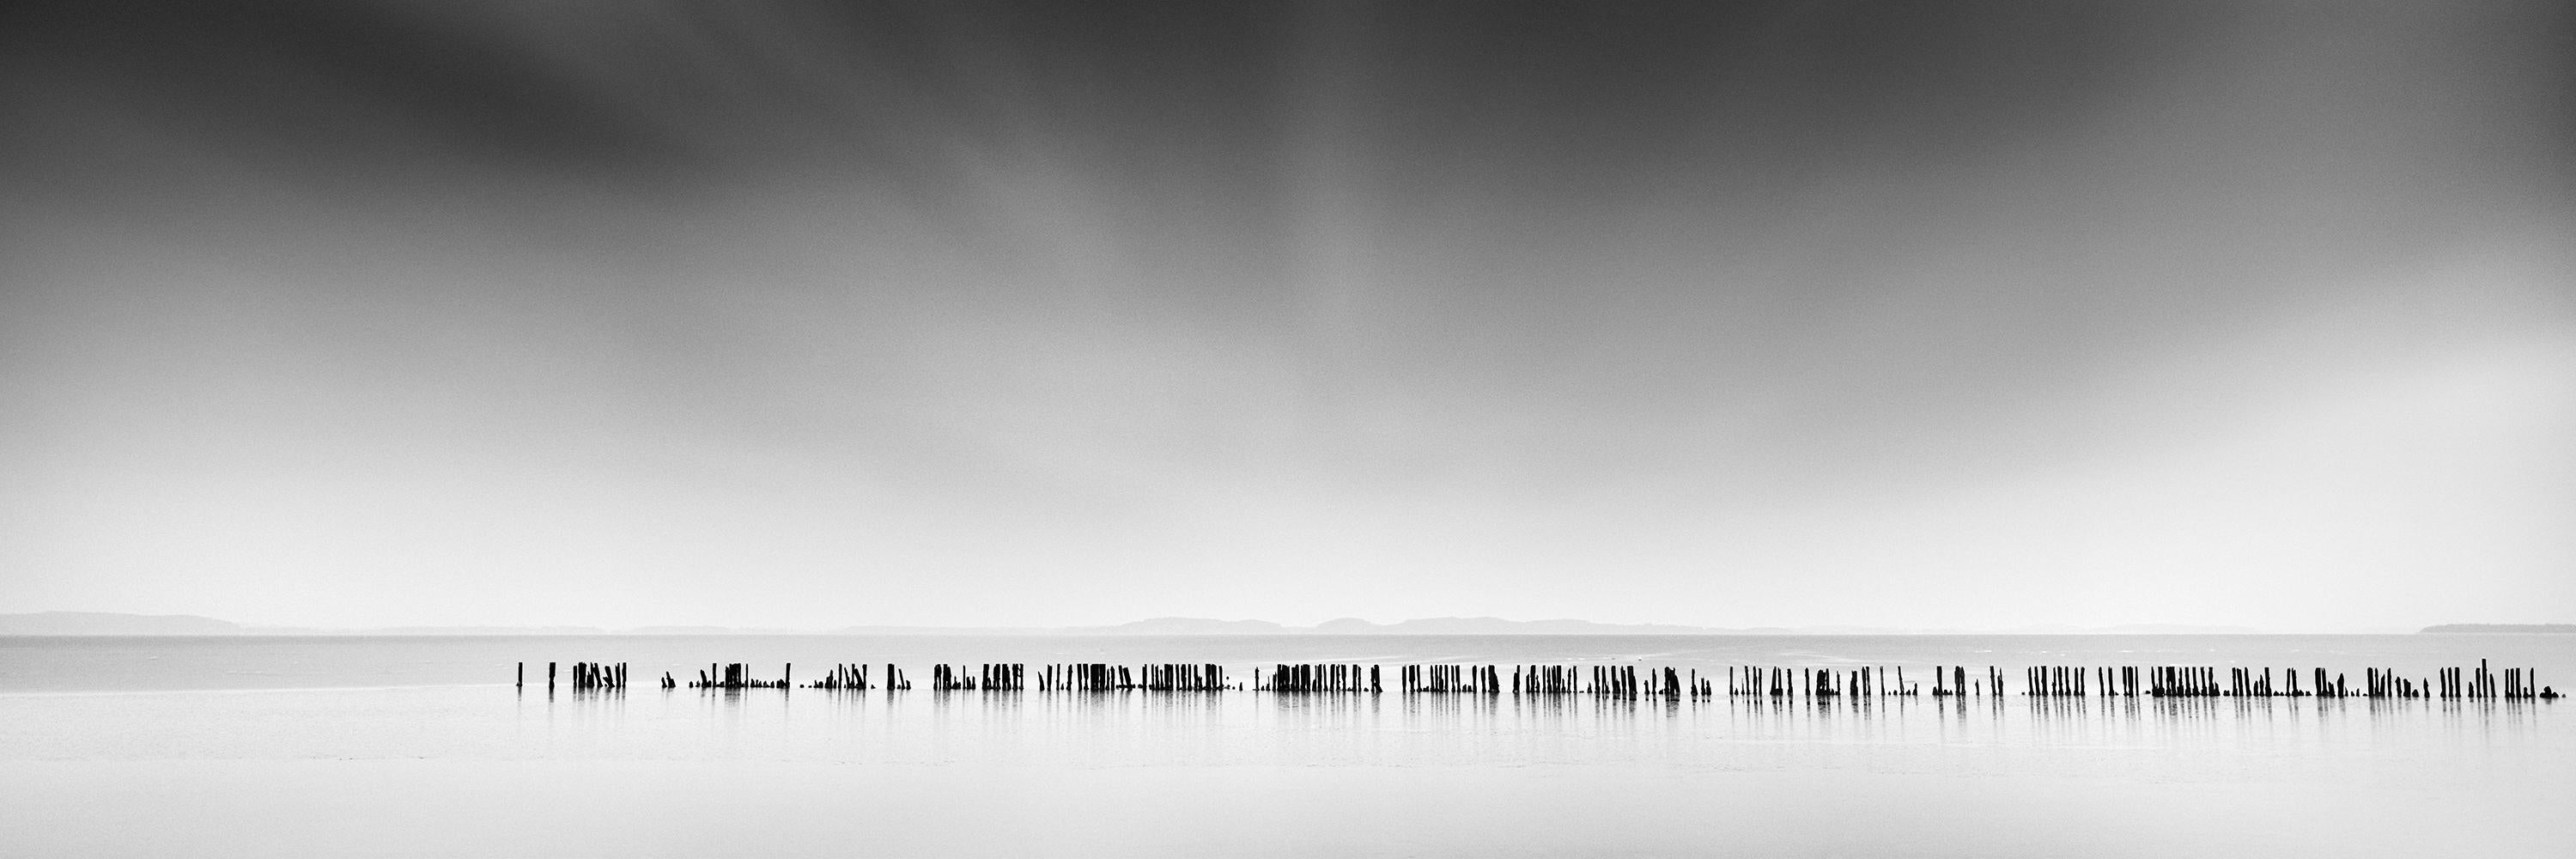 Black and White Photograph Gerald Berghammer - I. Sticks Panorama vagues déferlantes Allemagne n&b panorama paysage aquatique photo